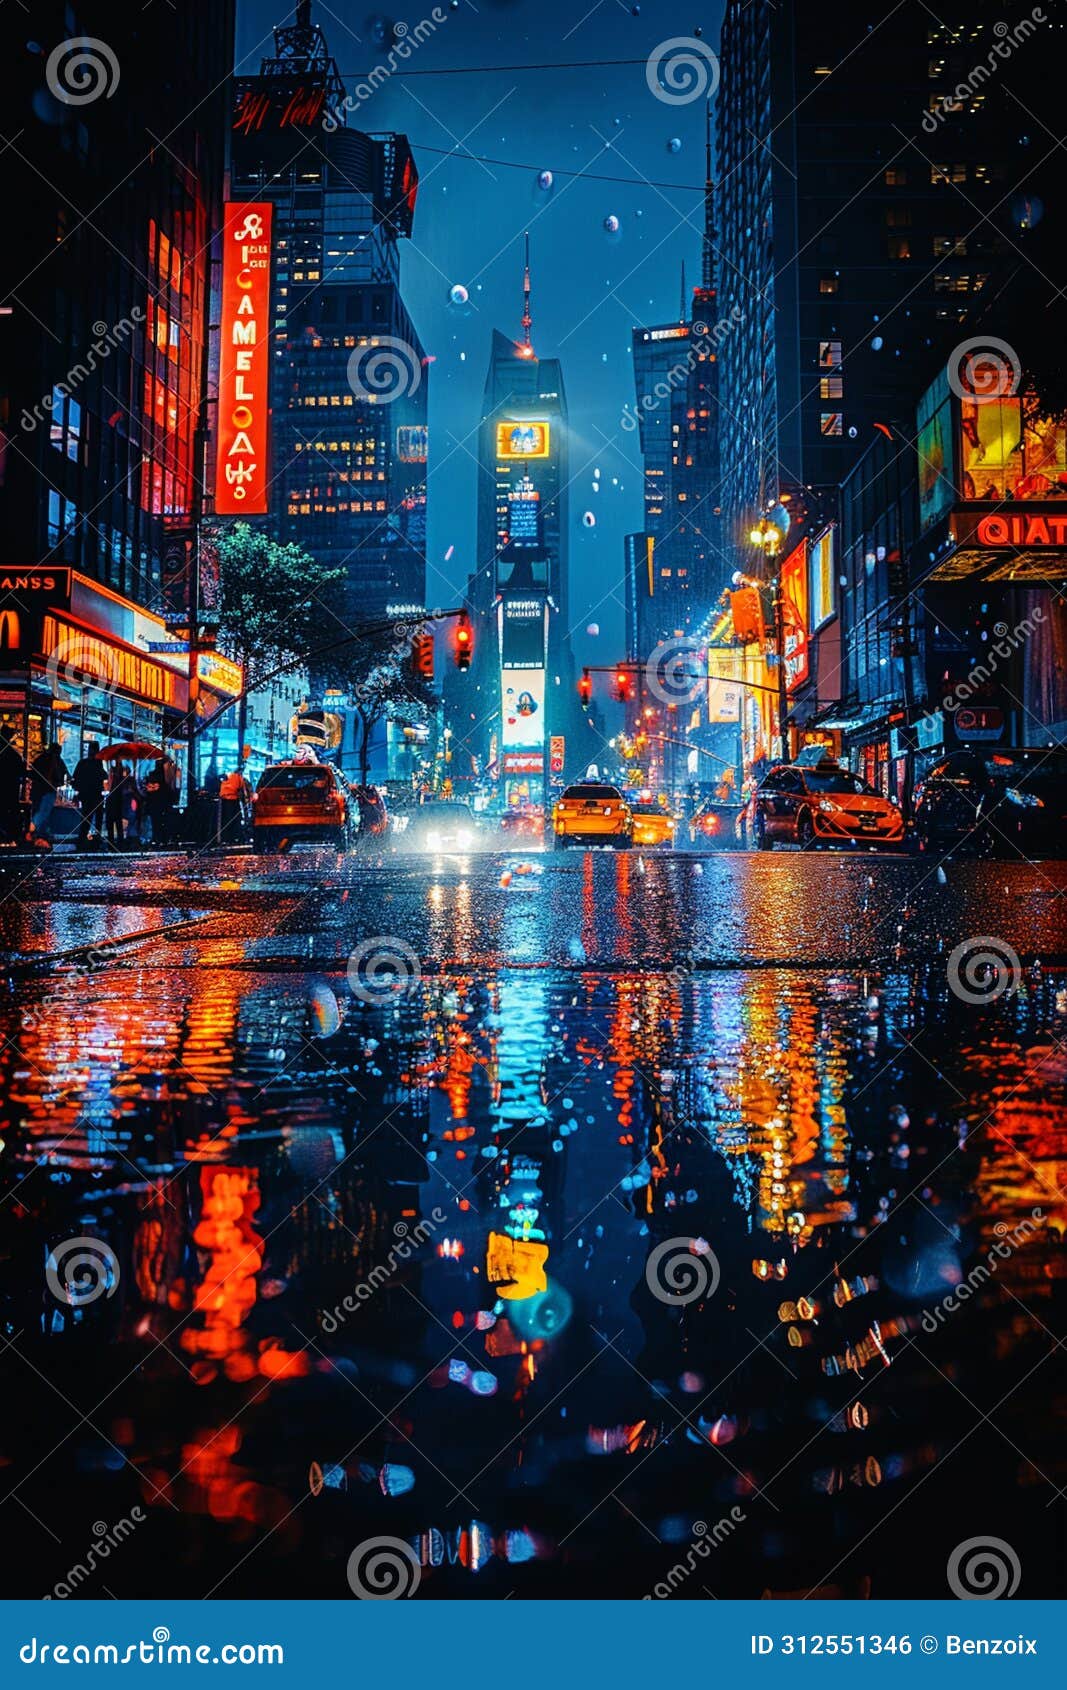 rain falling on a city street at night